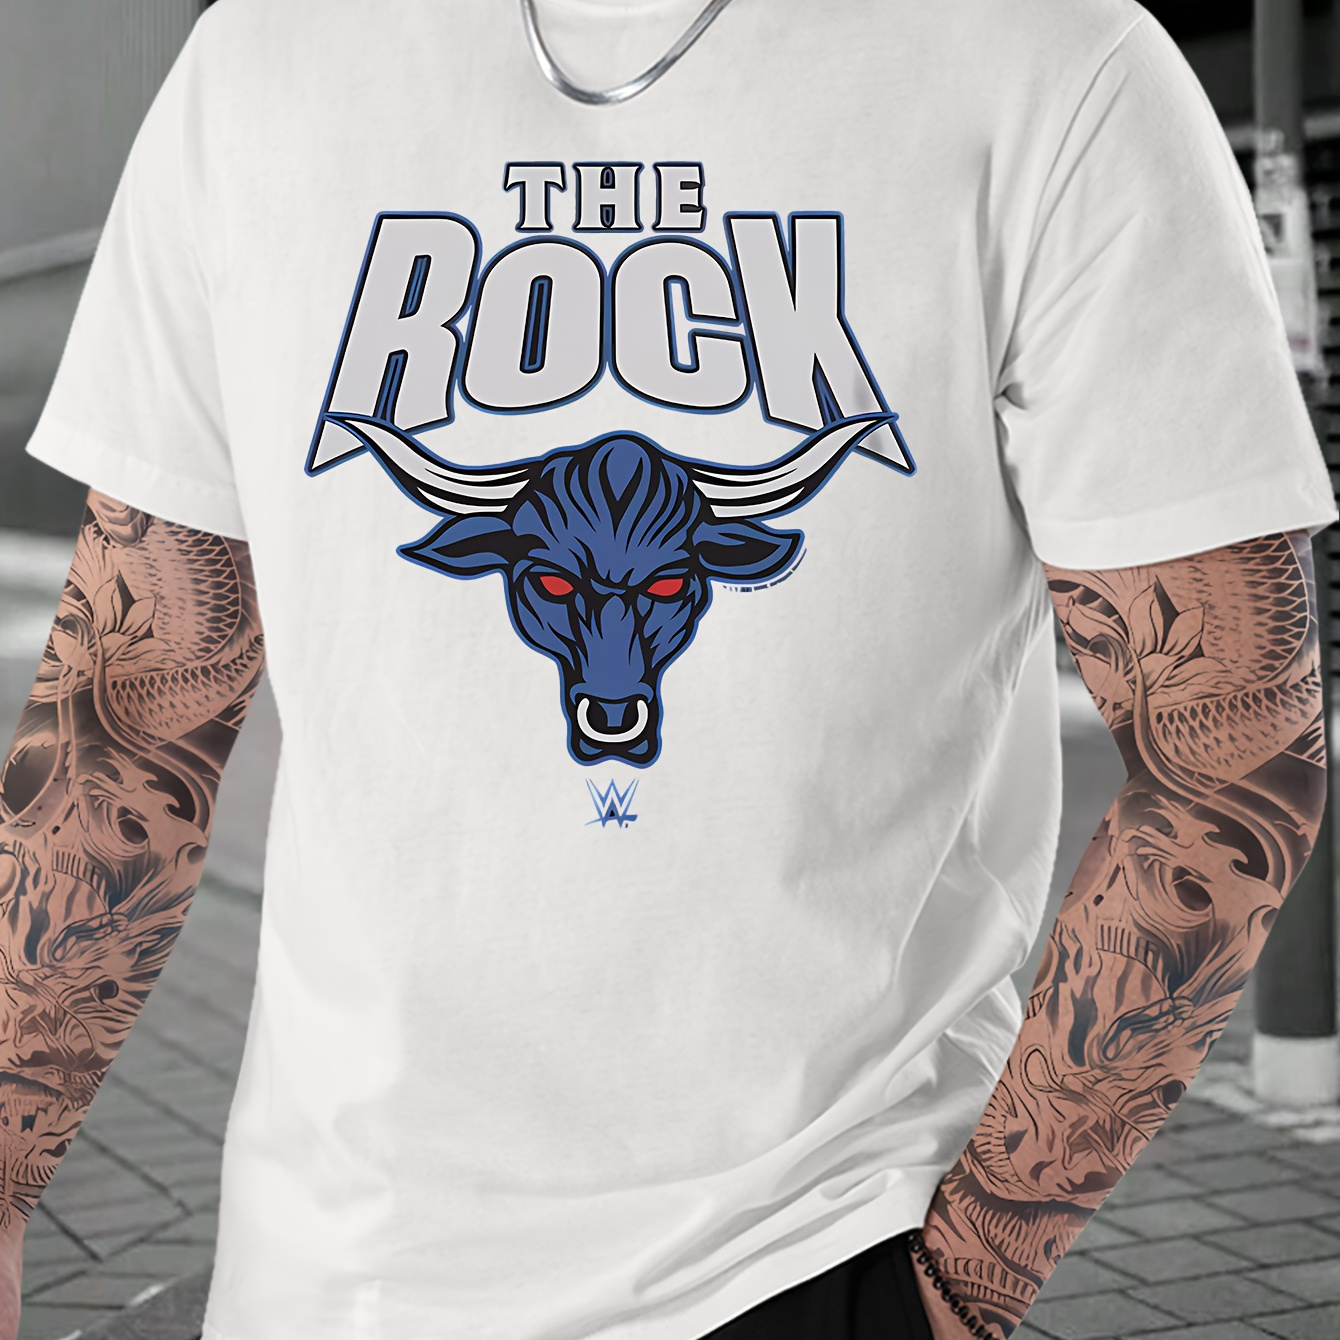 

The Rock Bull Illustration Print Tee Shirt, Tees For Men, Casual Short Sleeve T-shirt For Summer